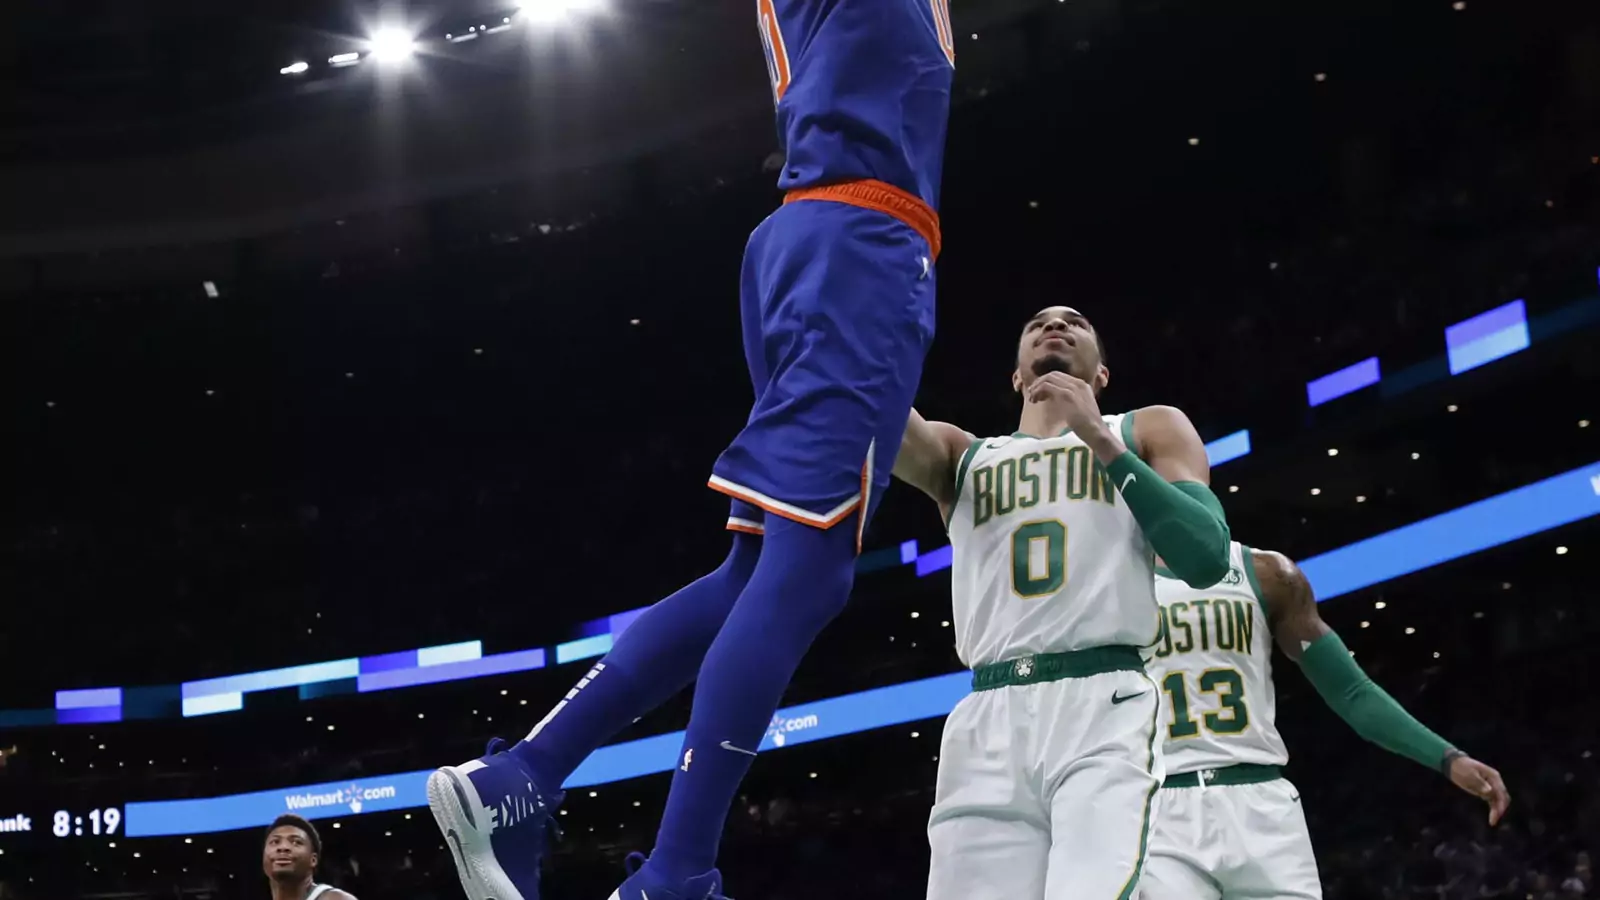 New York Knicks center Enes Kanter (00) dunks the ball over Boston Celtics forward Jayson Tatum (0) during the first half at TD Garden